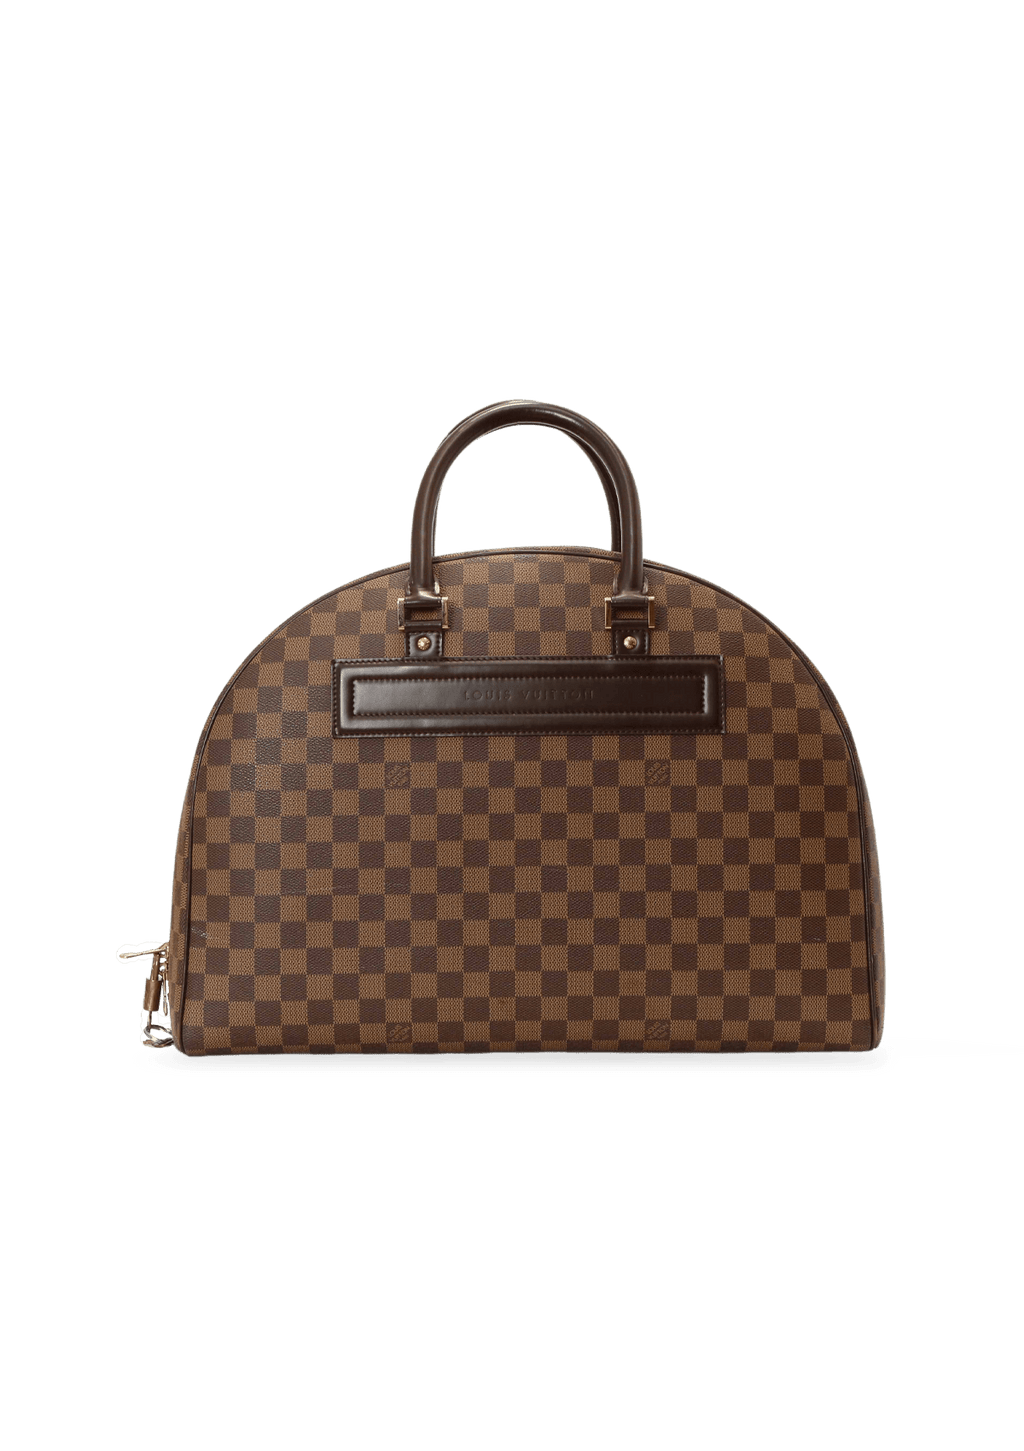 LOUIS VUITTON Handbag Damier Nolita Brown Ladies N41455